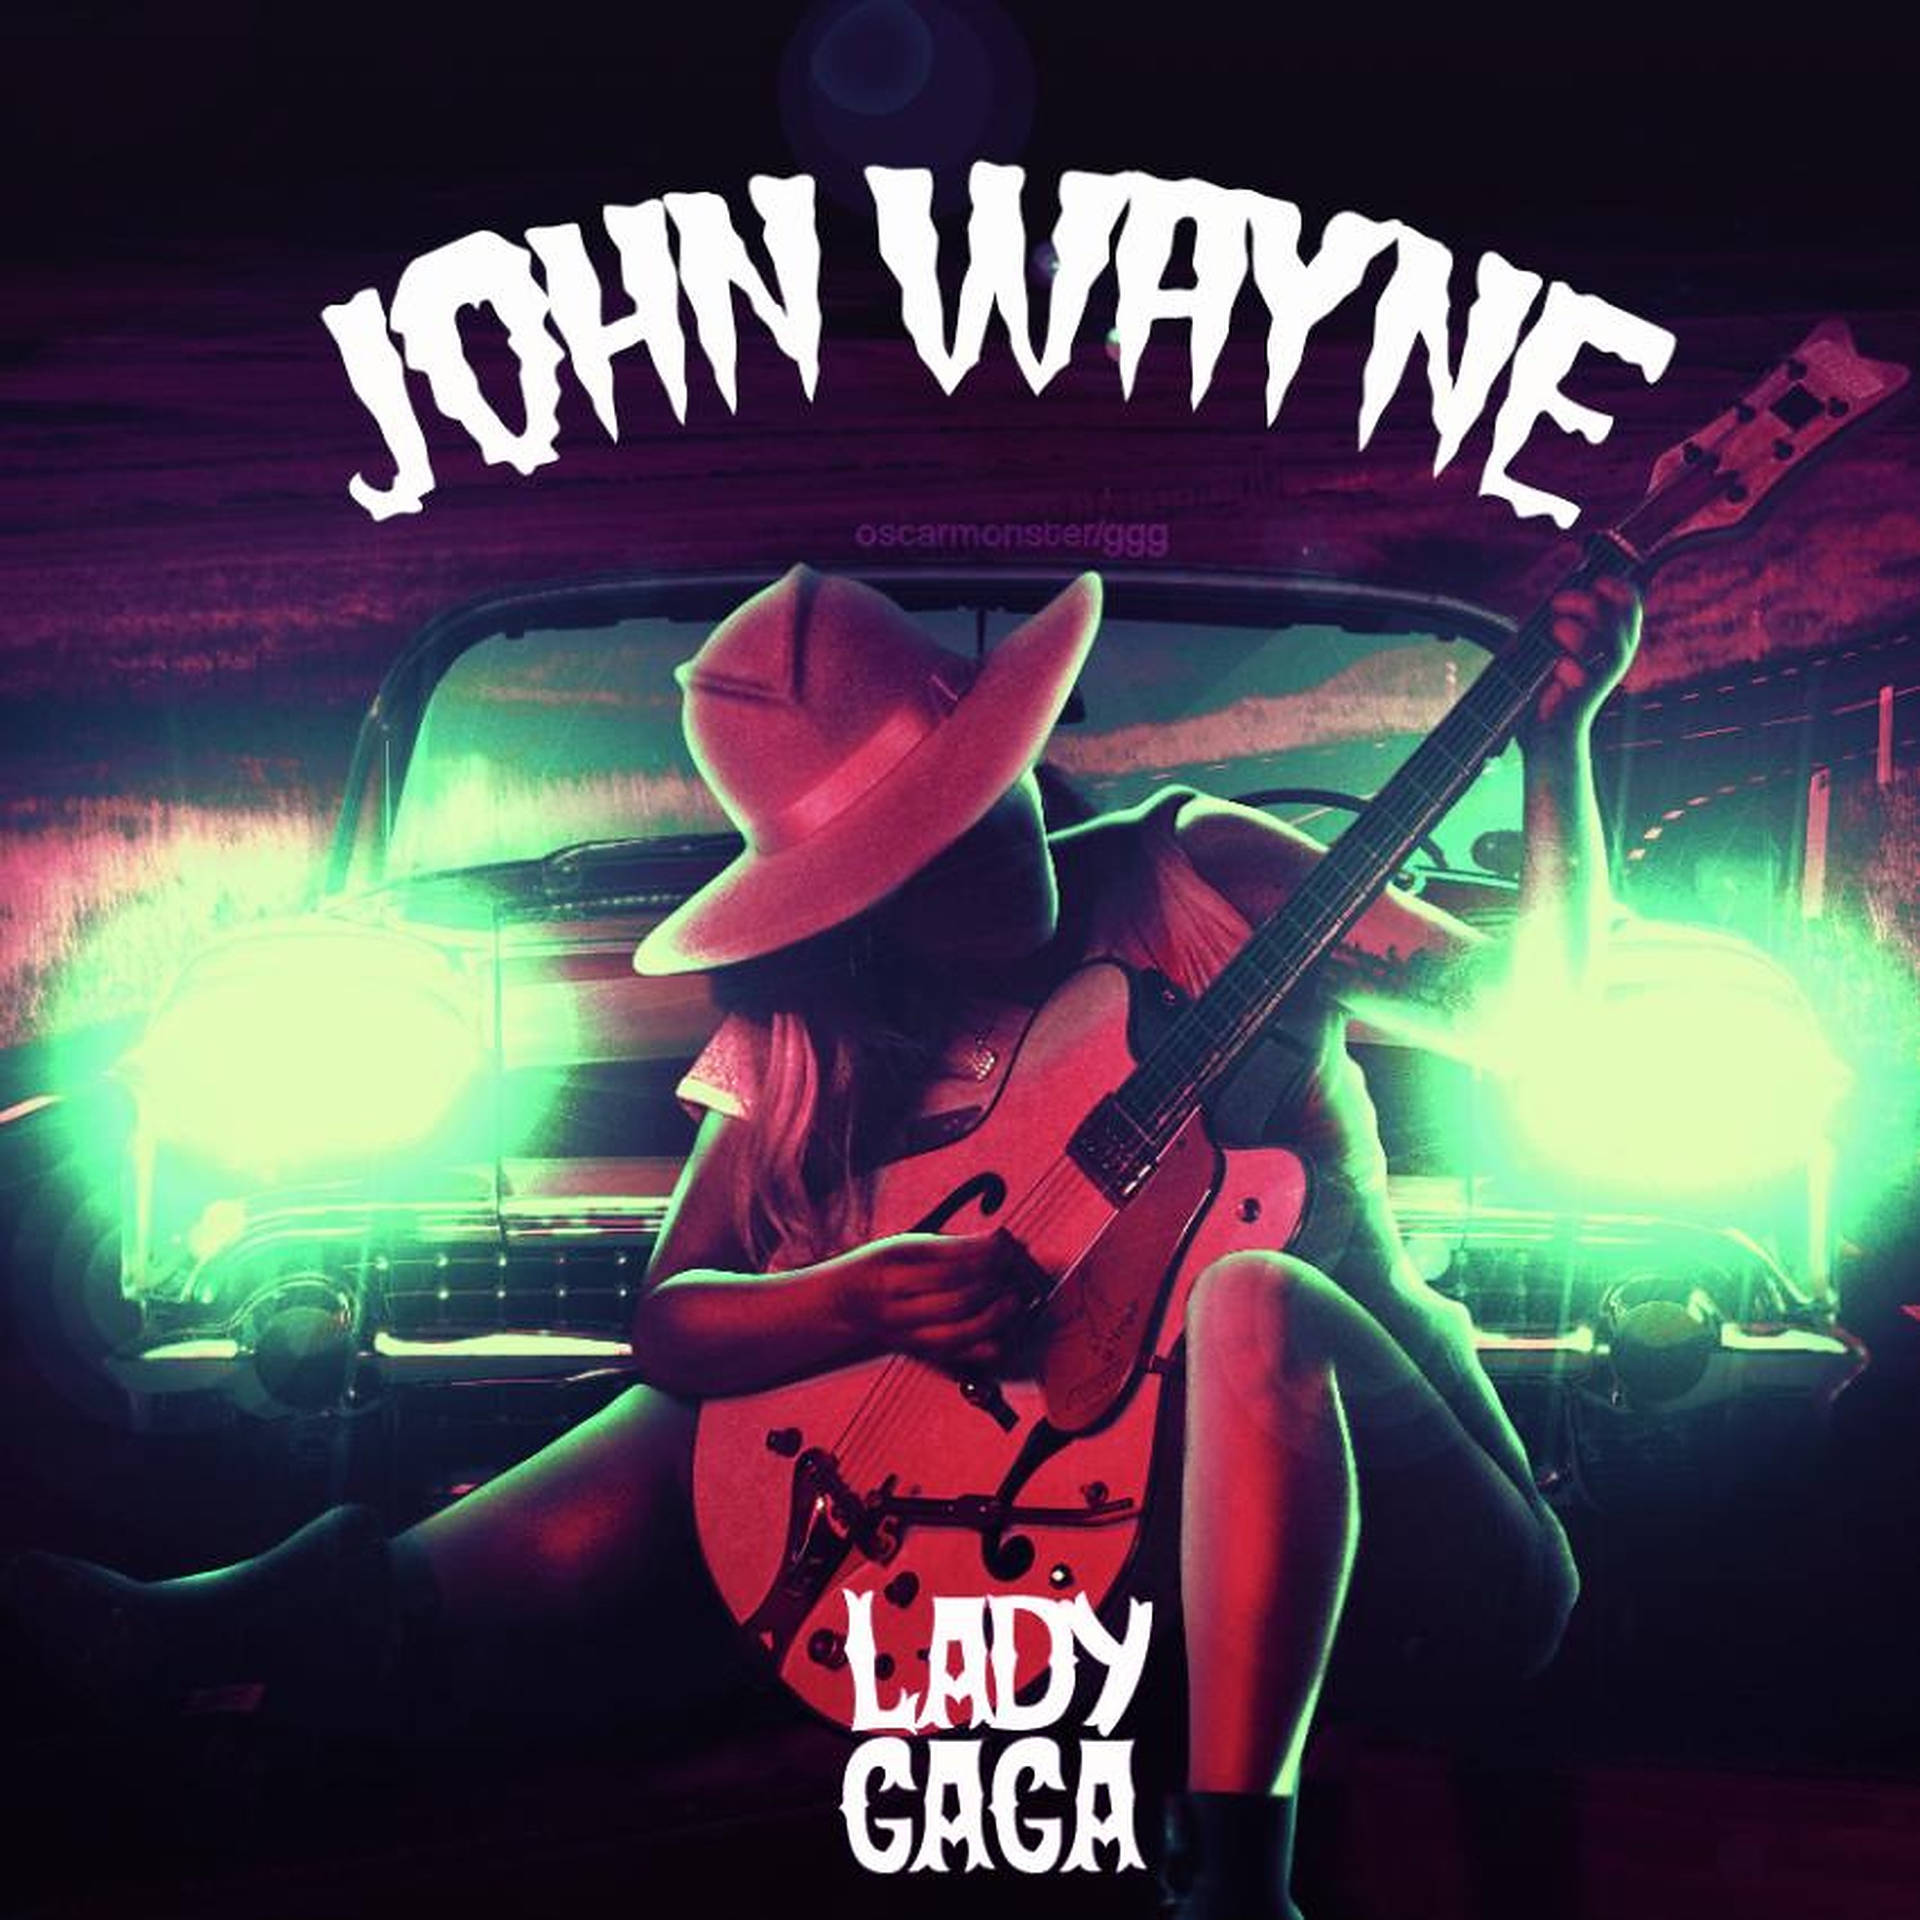 John Wayne And Lady Gaga Poster Background